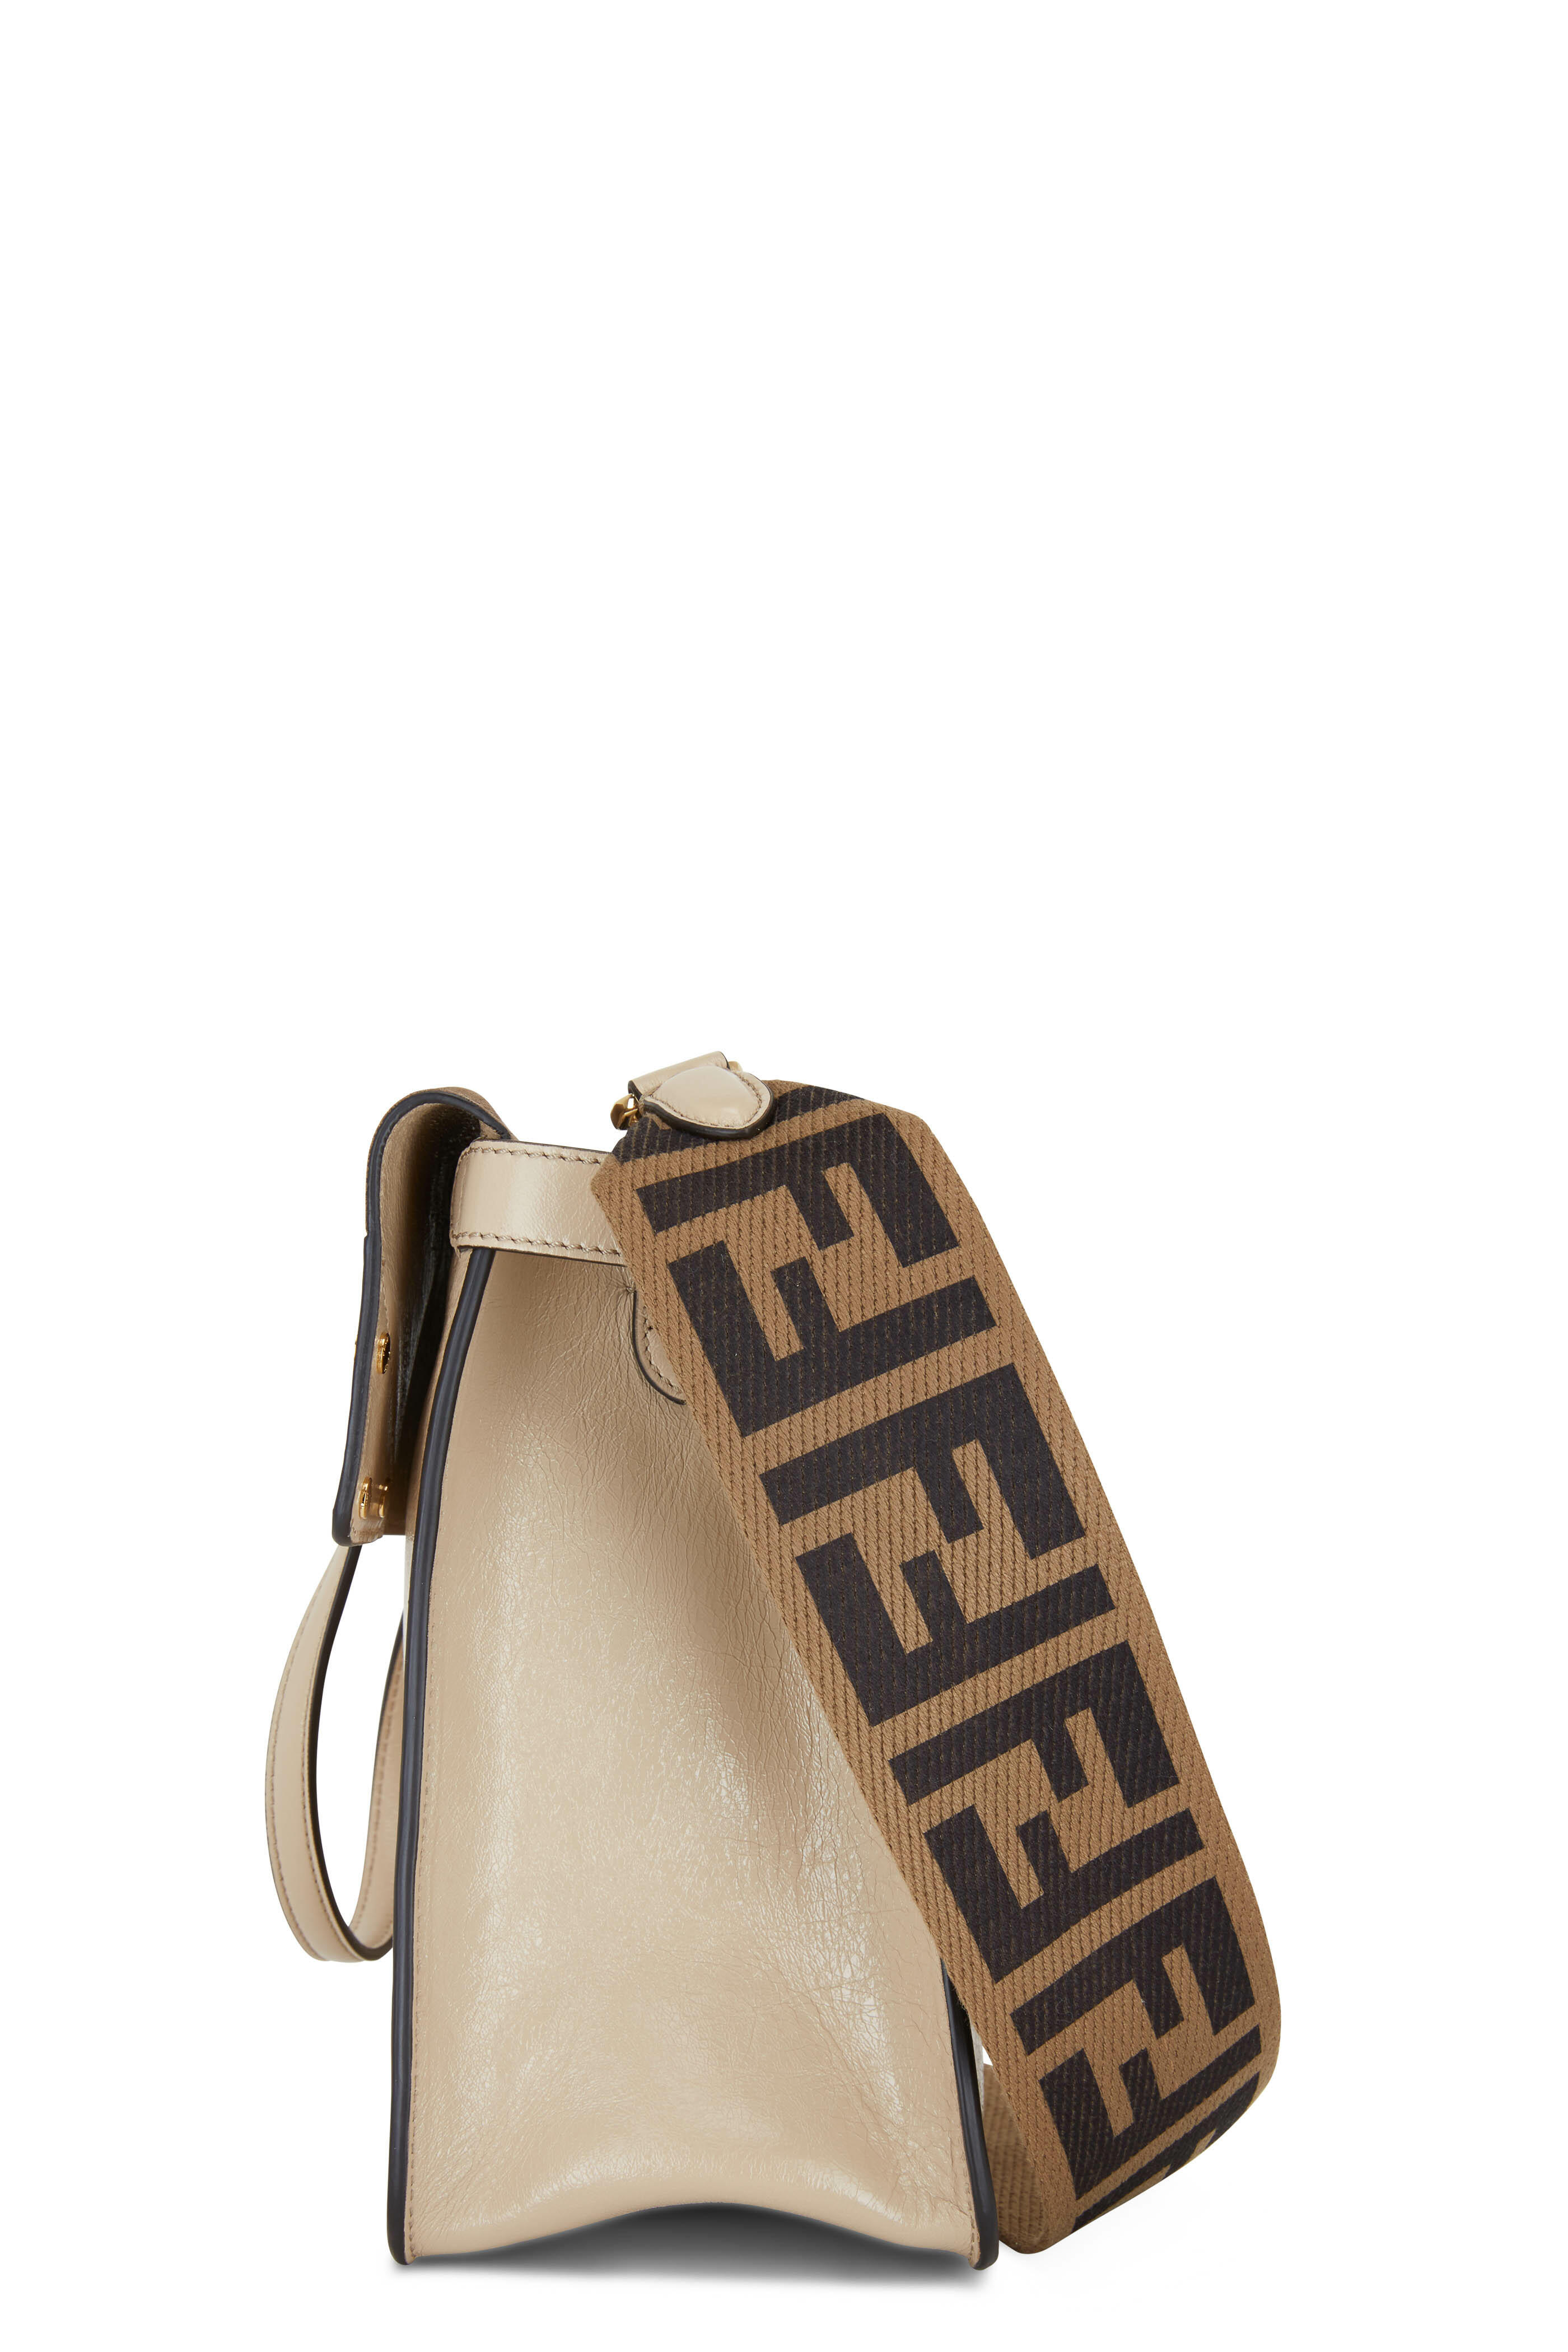 Fendi Green/Brown Python Leather Strap You Bag Shoulder Strap Fendi